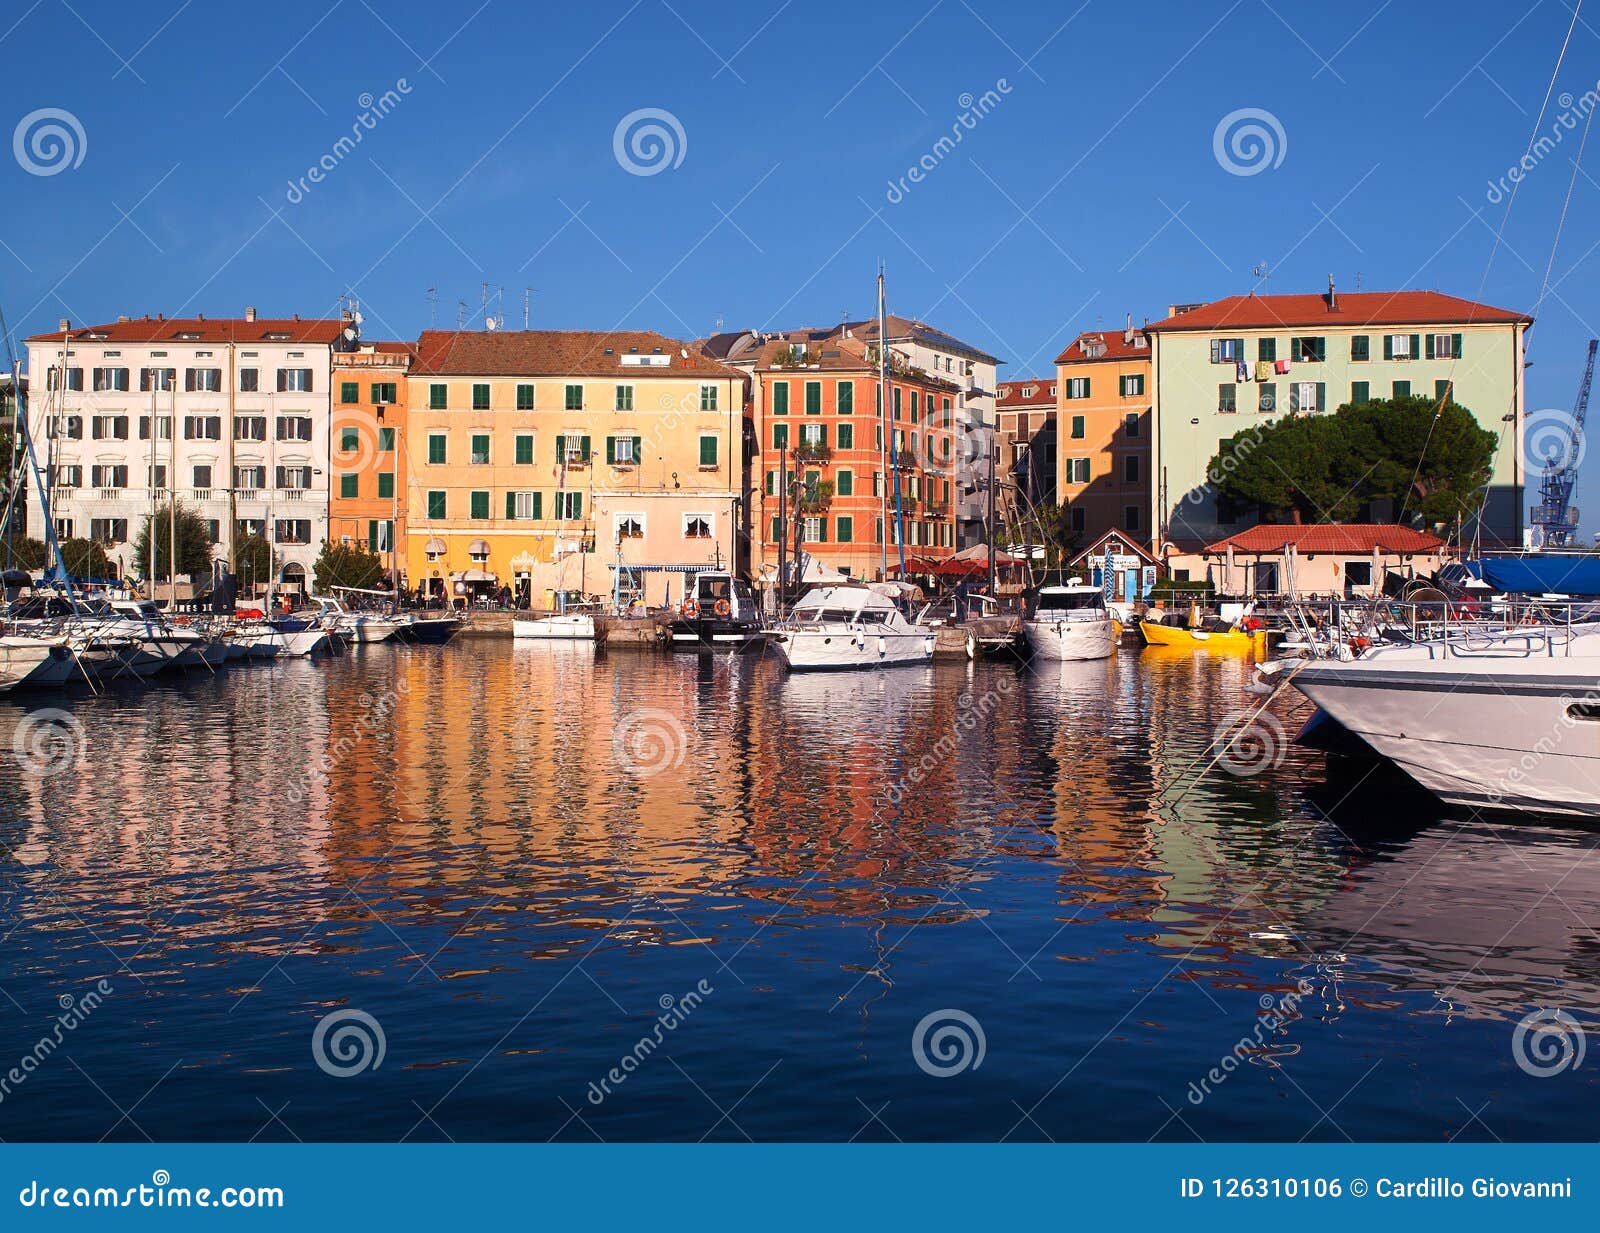 The port of Savona, Italy stock photo. Image of riviera - 126310106